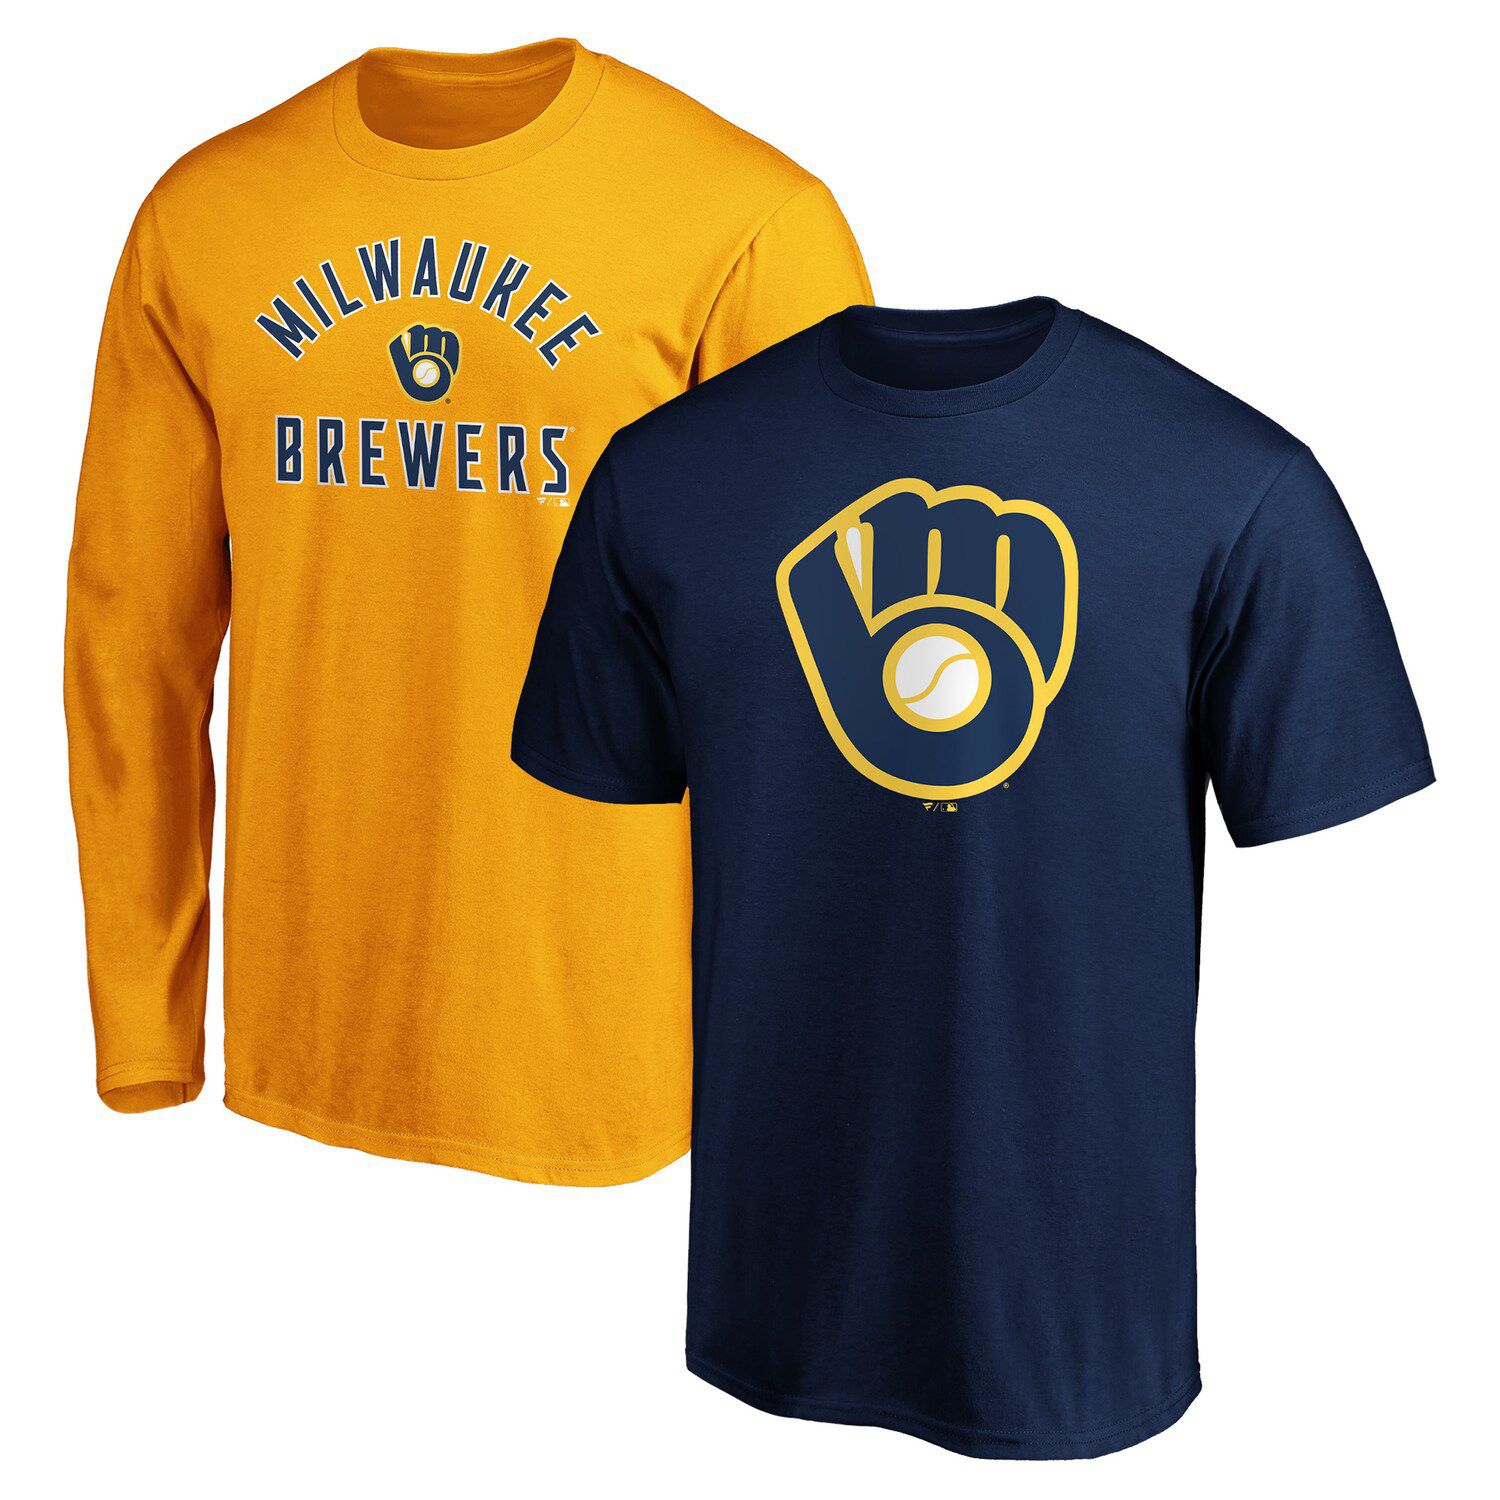 brewers shirts kohls